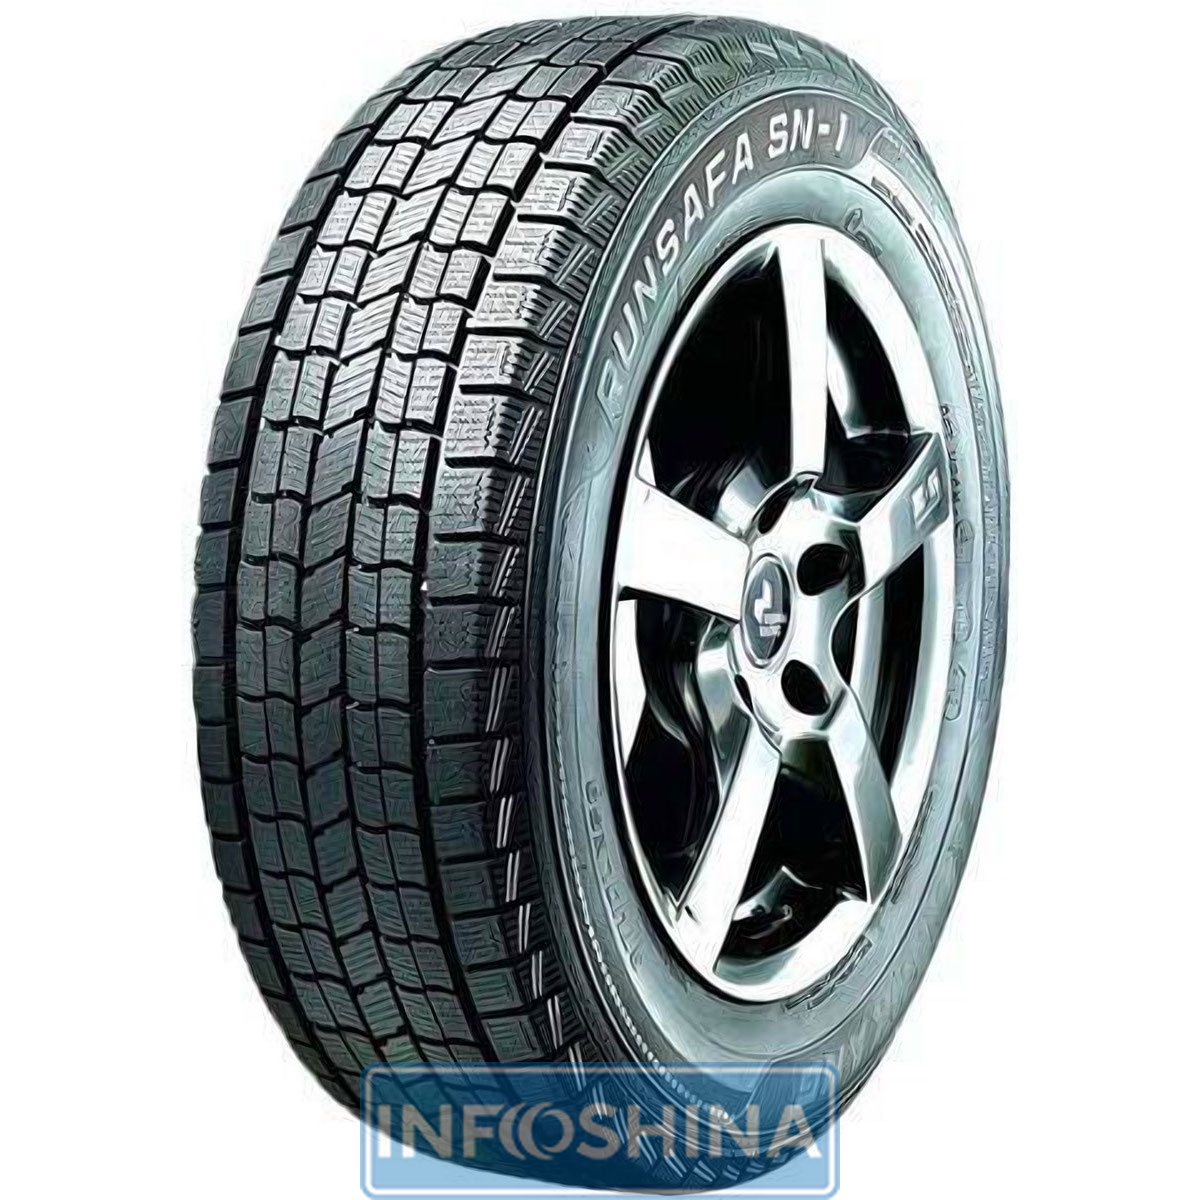 Купить шины Nankang Runsafa SN-1 205/60 R16 92Q